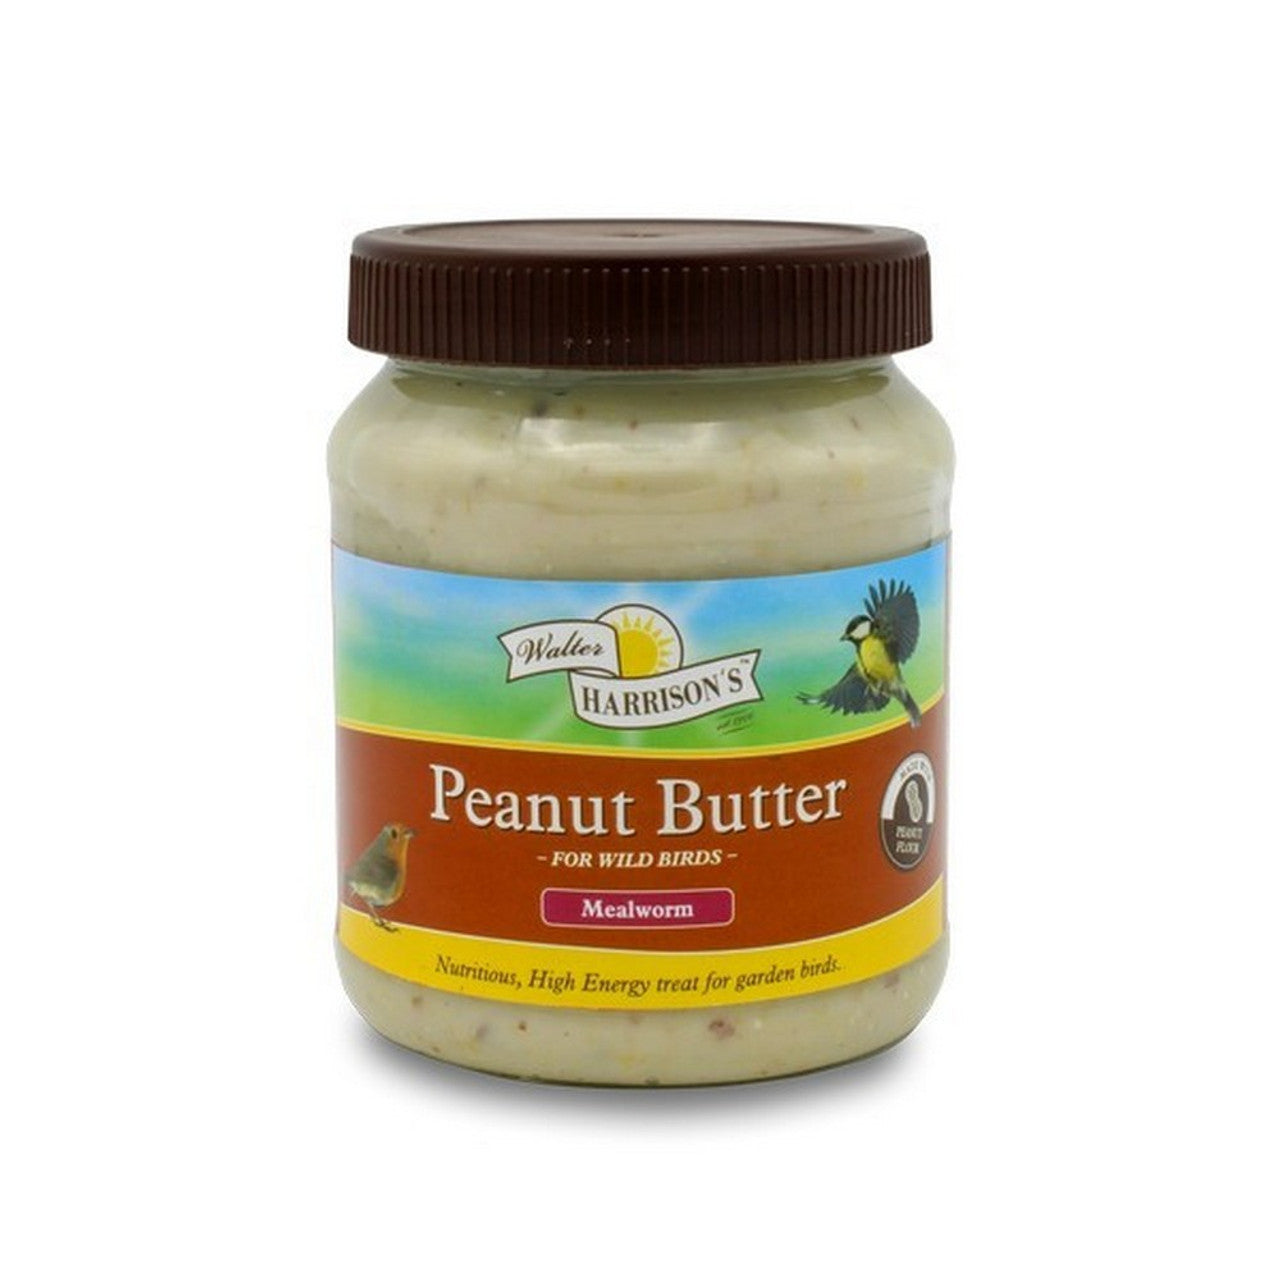 Harrisons Original Peanut Butter Jar for Wild Birds